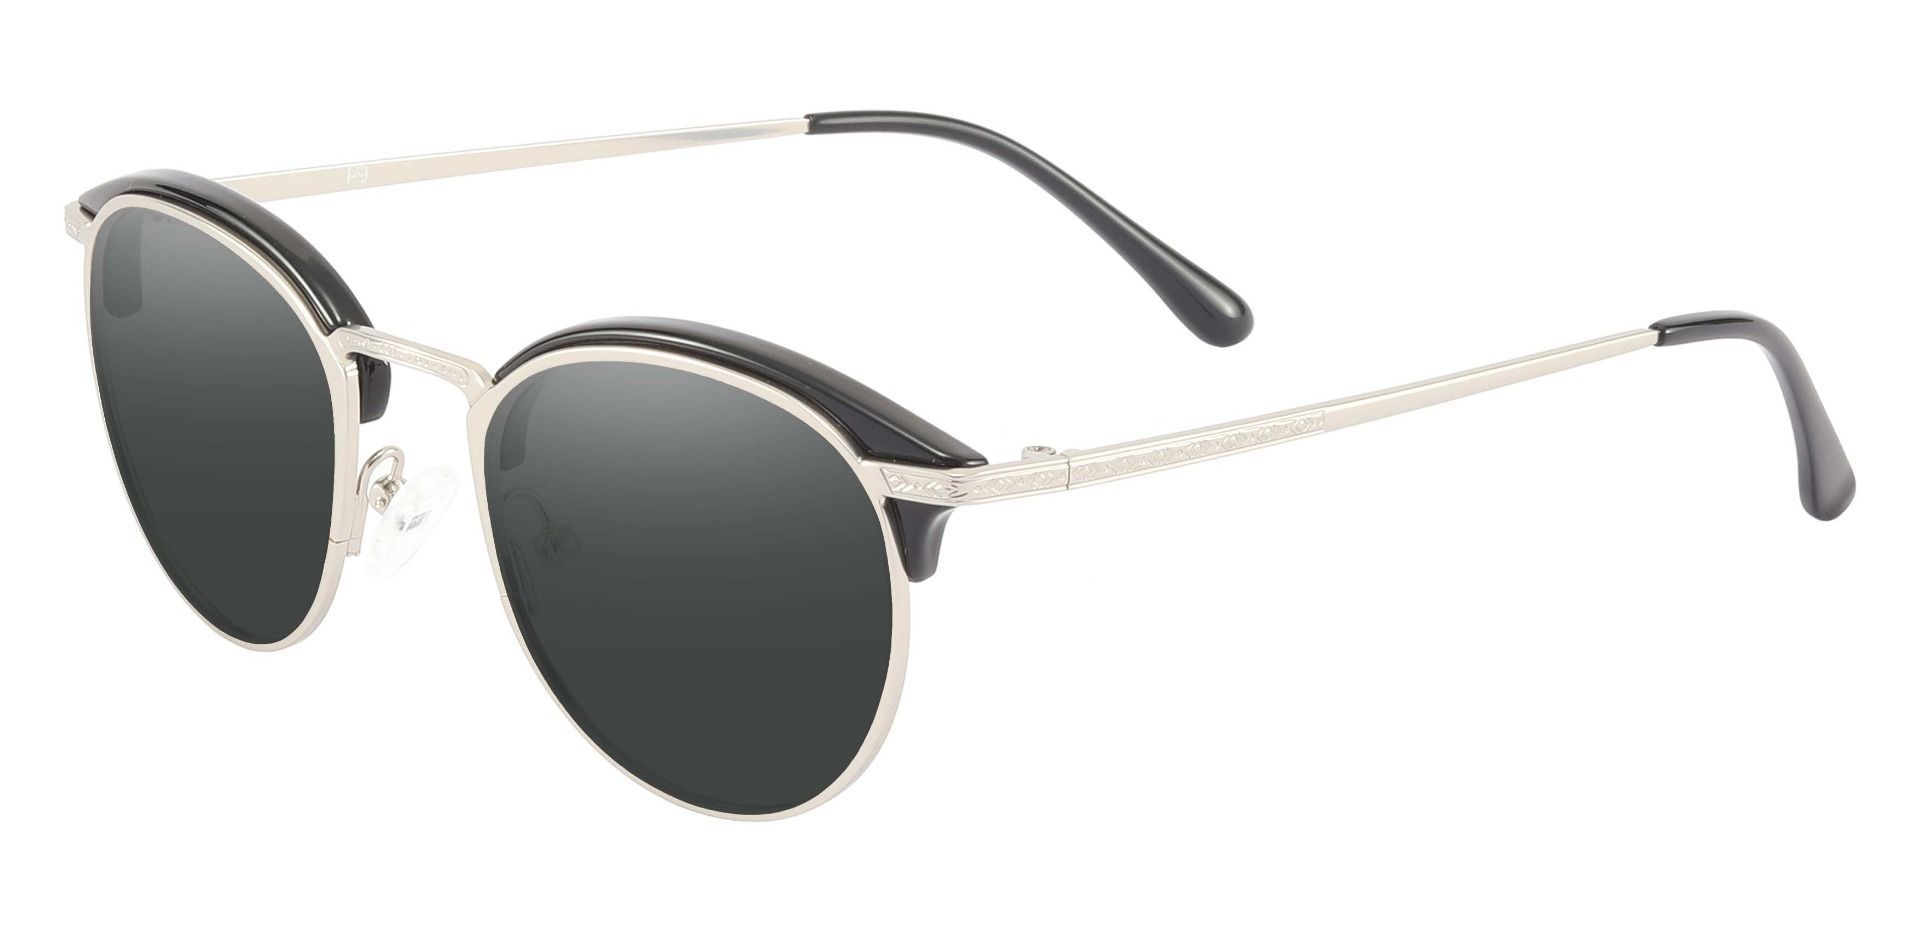 Shultz Browline Progressive Sunglasses - Silver Frame With Gray Lenses